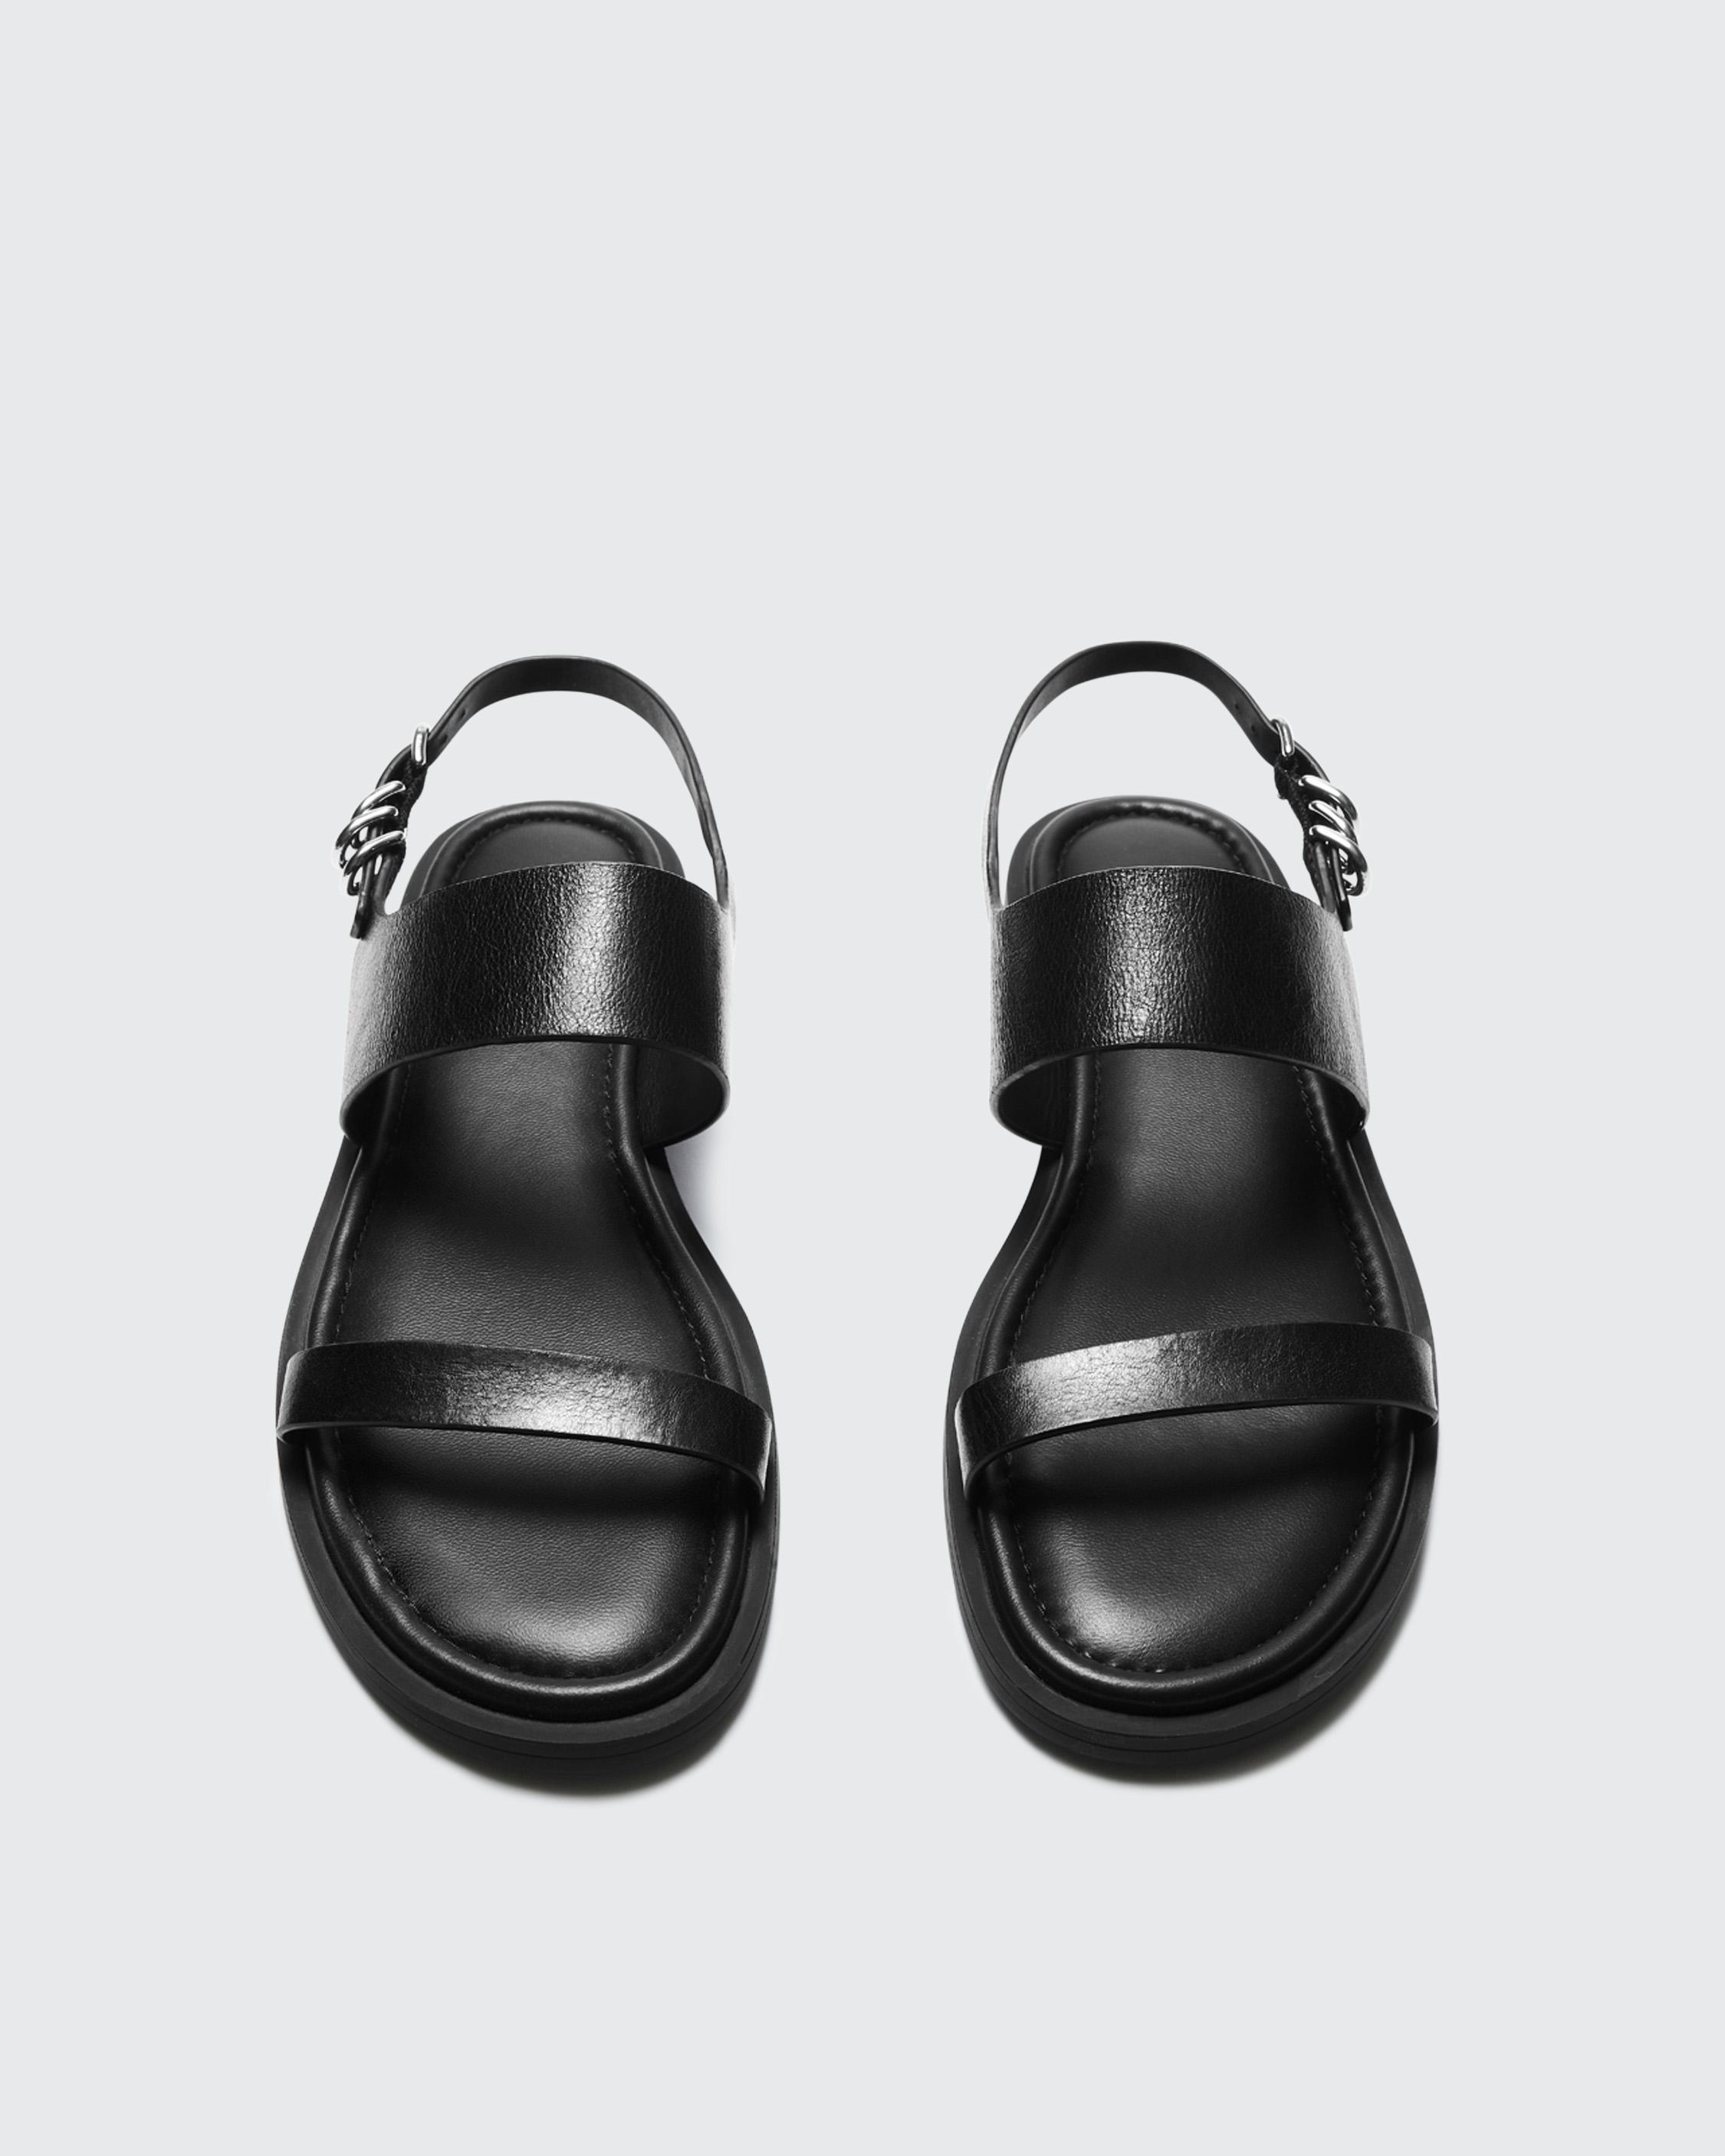 Geo Sandal - Leather
Flat Sandal - 4